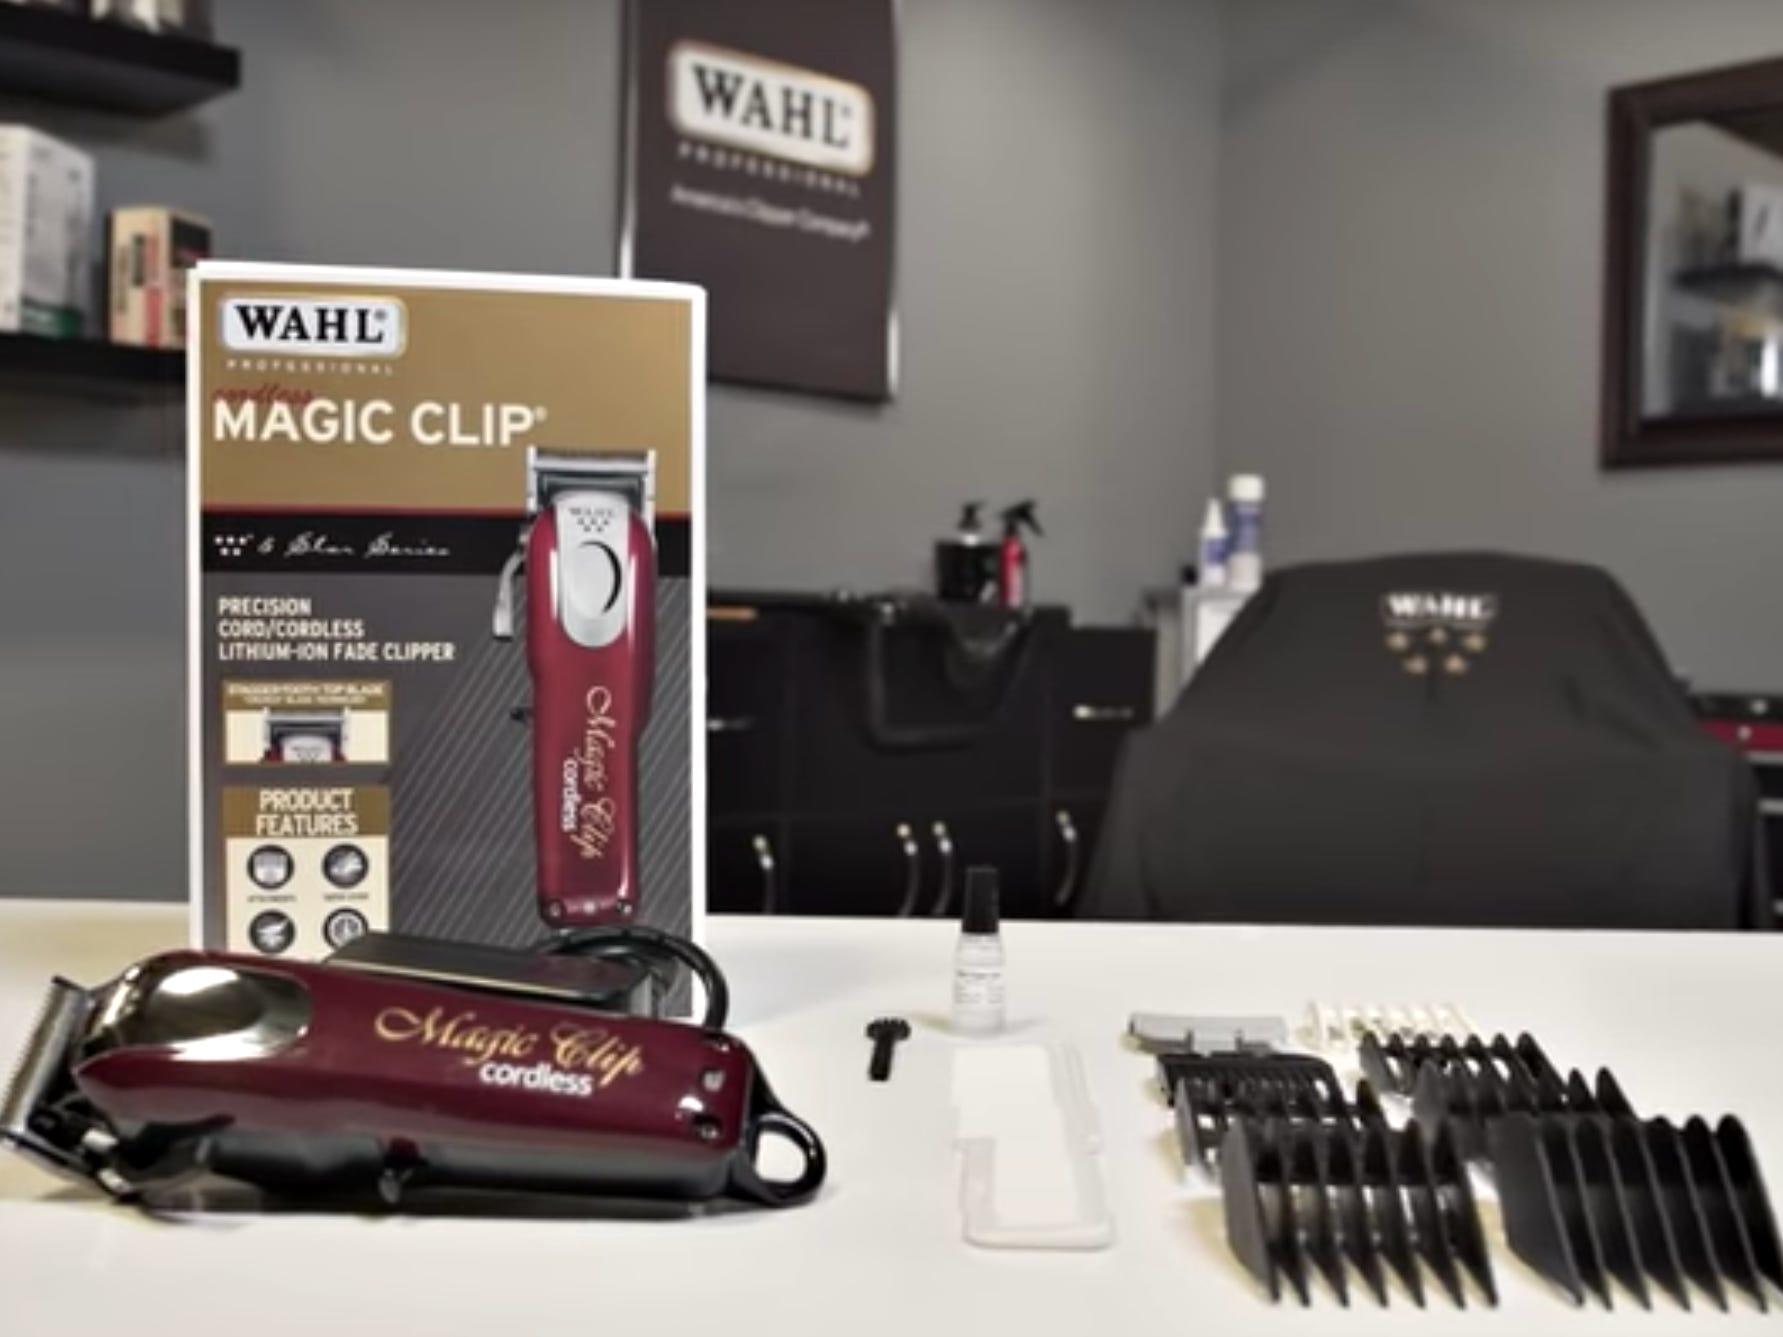 Wahl Professional 5 Star Magic Clip Cordless Hair clipper  Shaver trimmer  grooming tool hair cut  Lazada Singapore